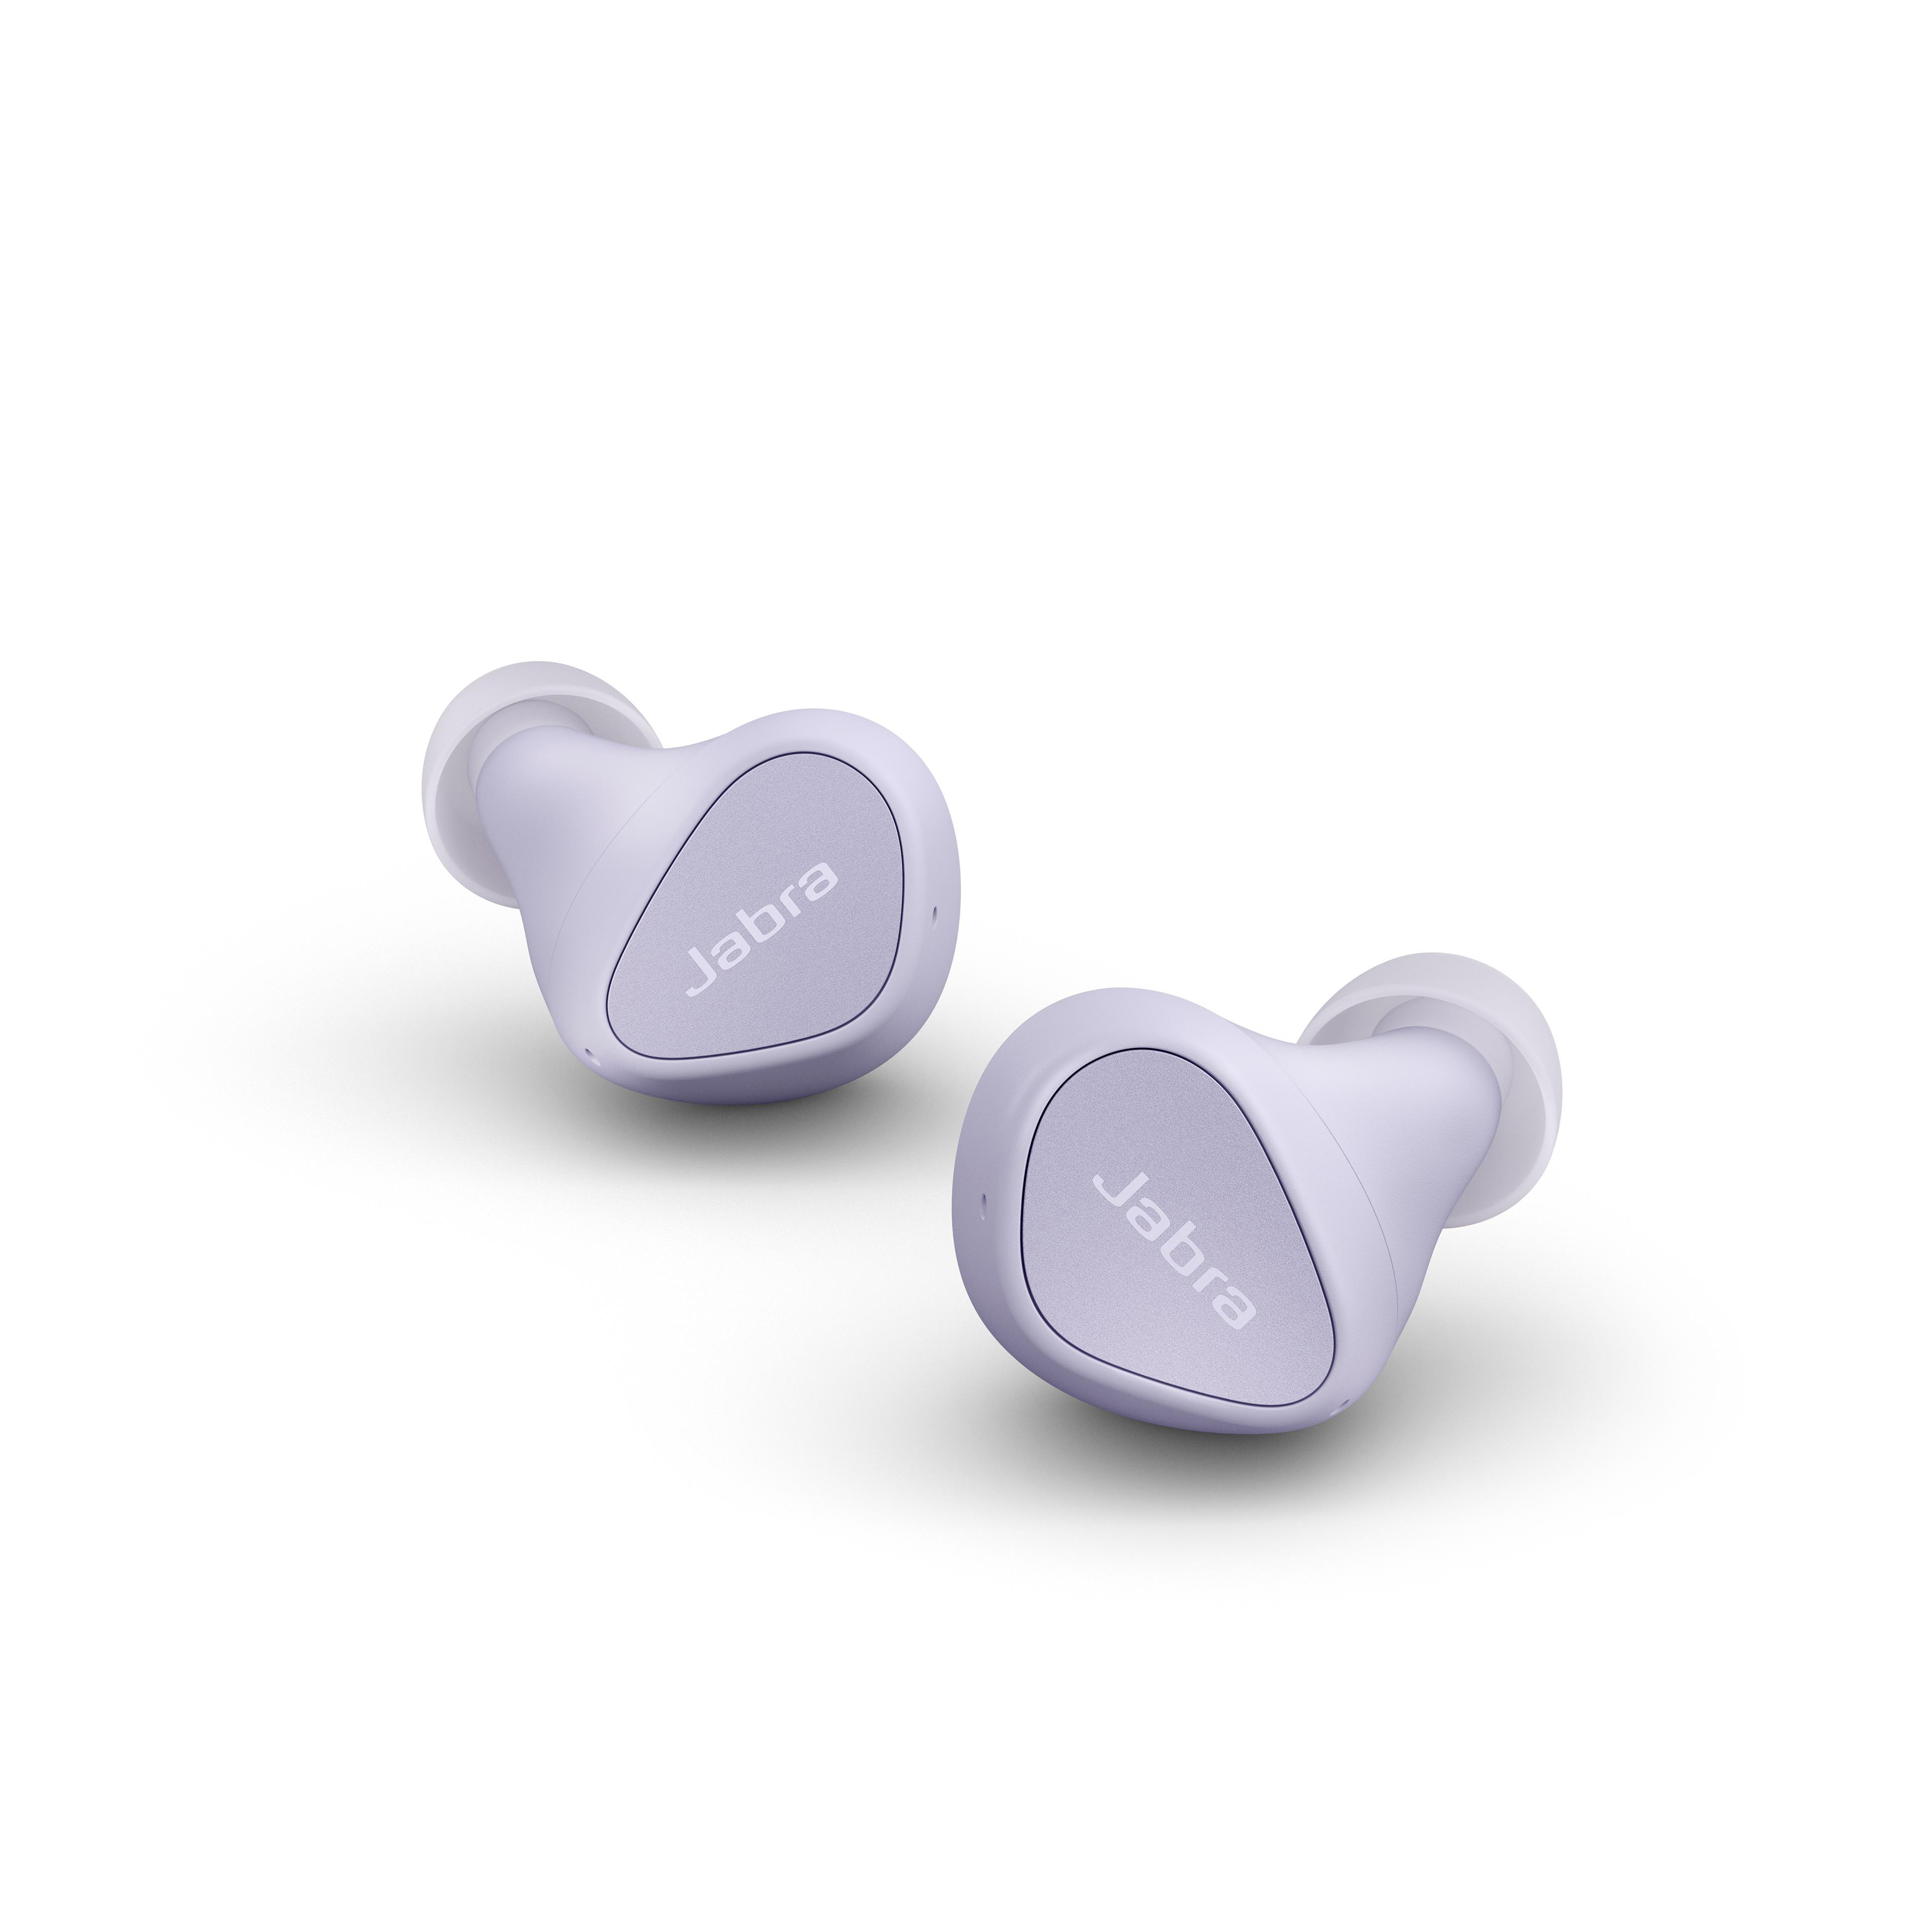 JABRA ANC, Bluetooth Kopfhörer In-ear 4, mit Elite Lilac